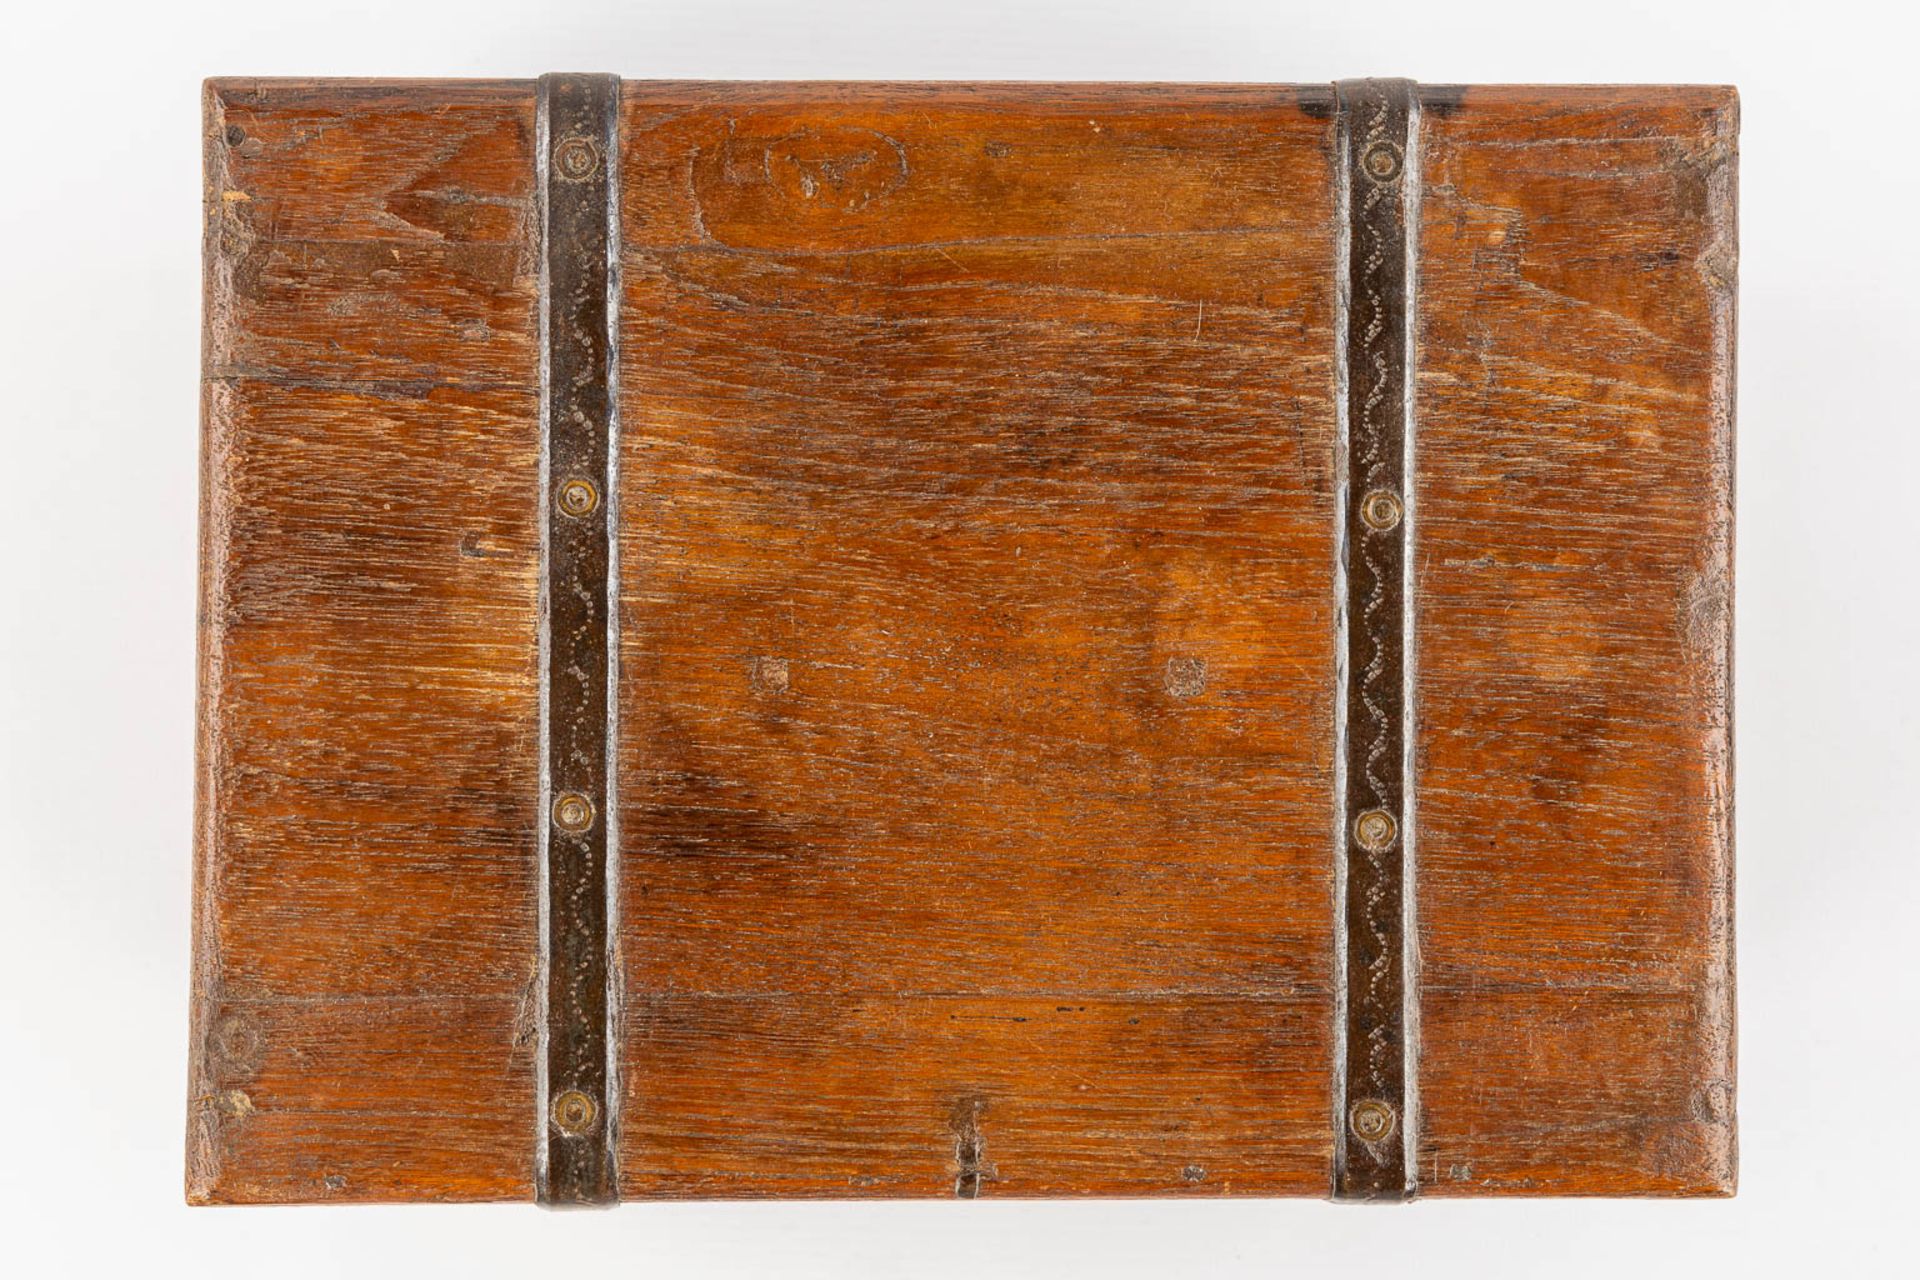 An antique money box or storage chest, oak and wrought iron, 19th C. (L:23 x W:31 x H:13 cm) - Bild 12 aus 13